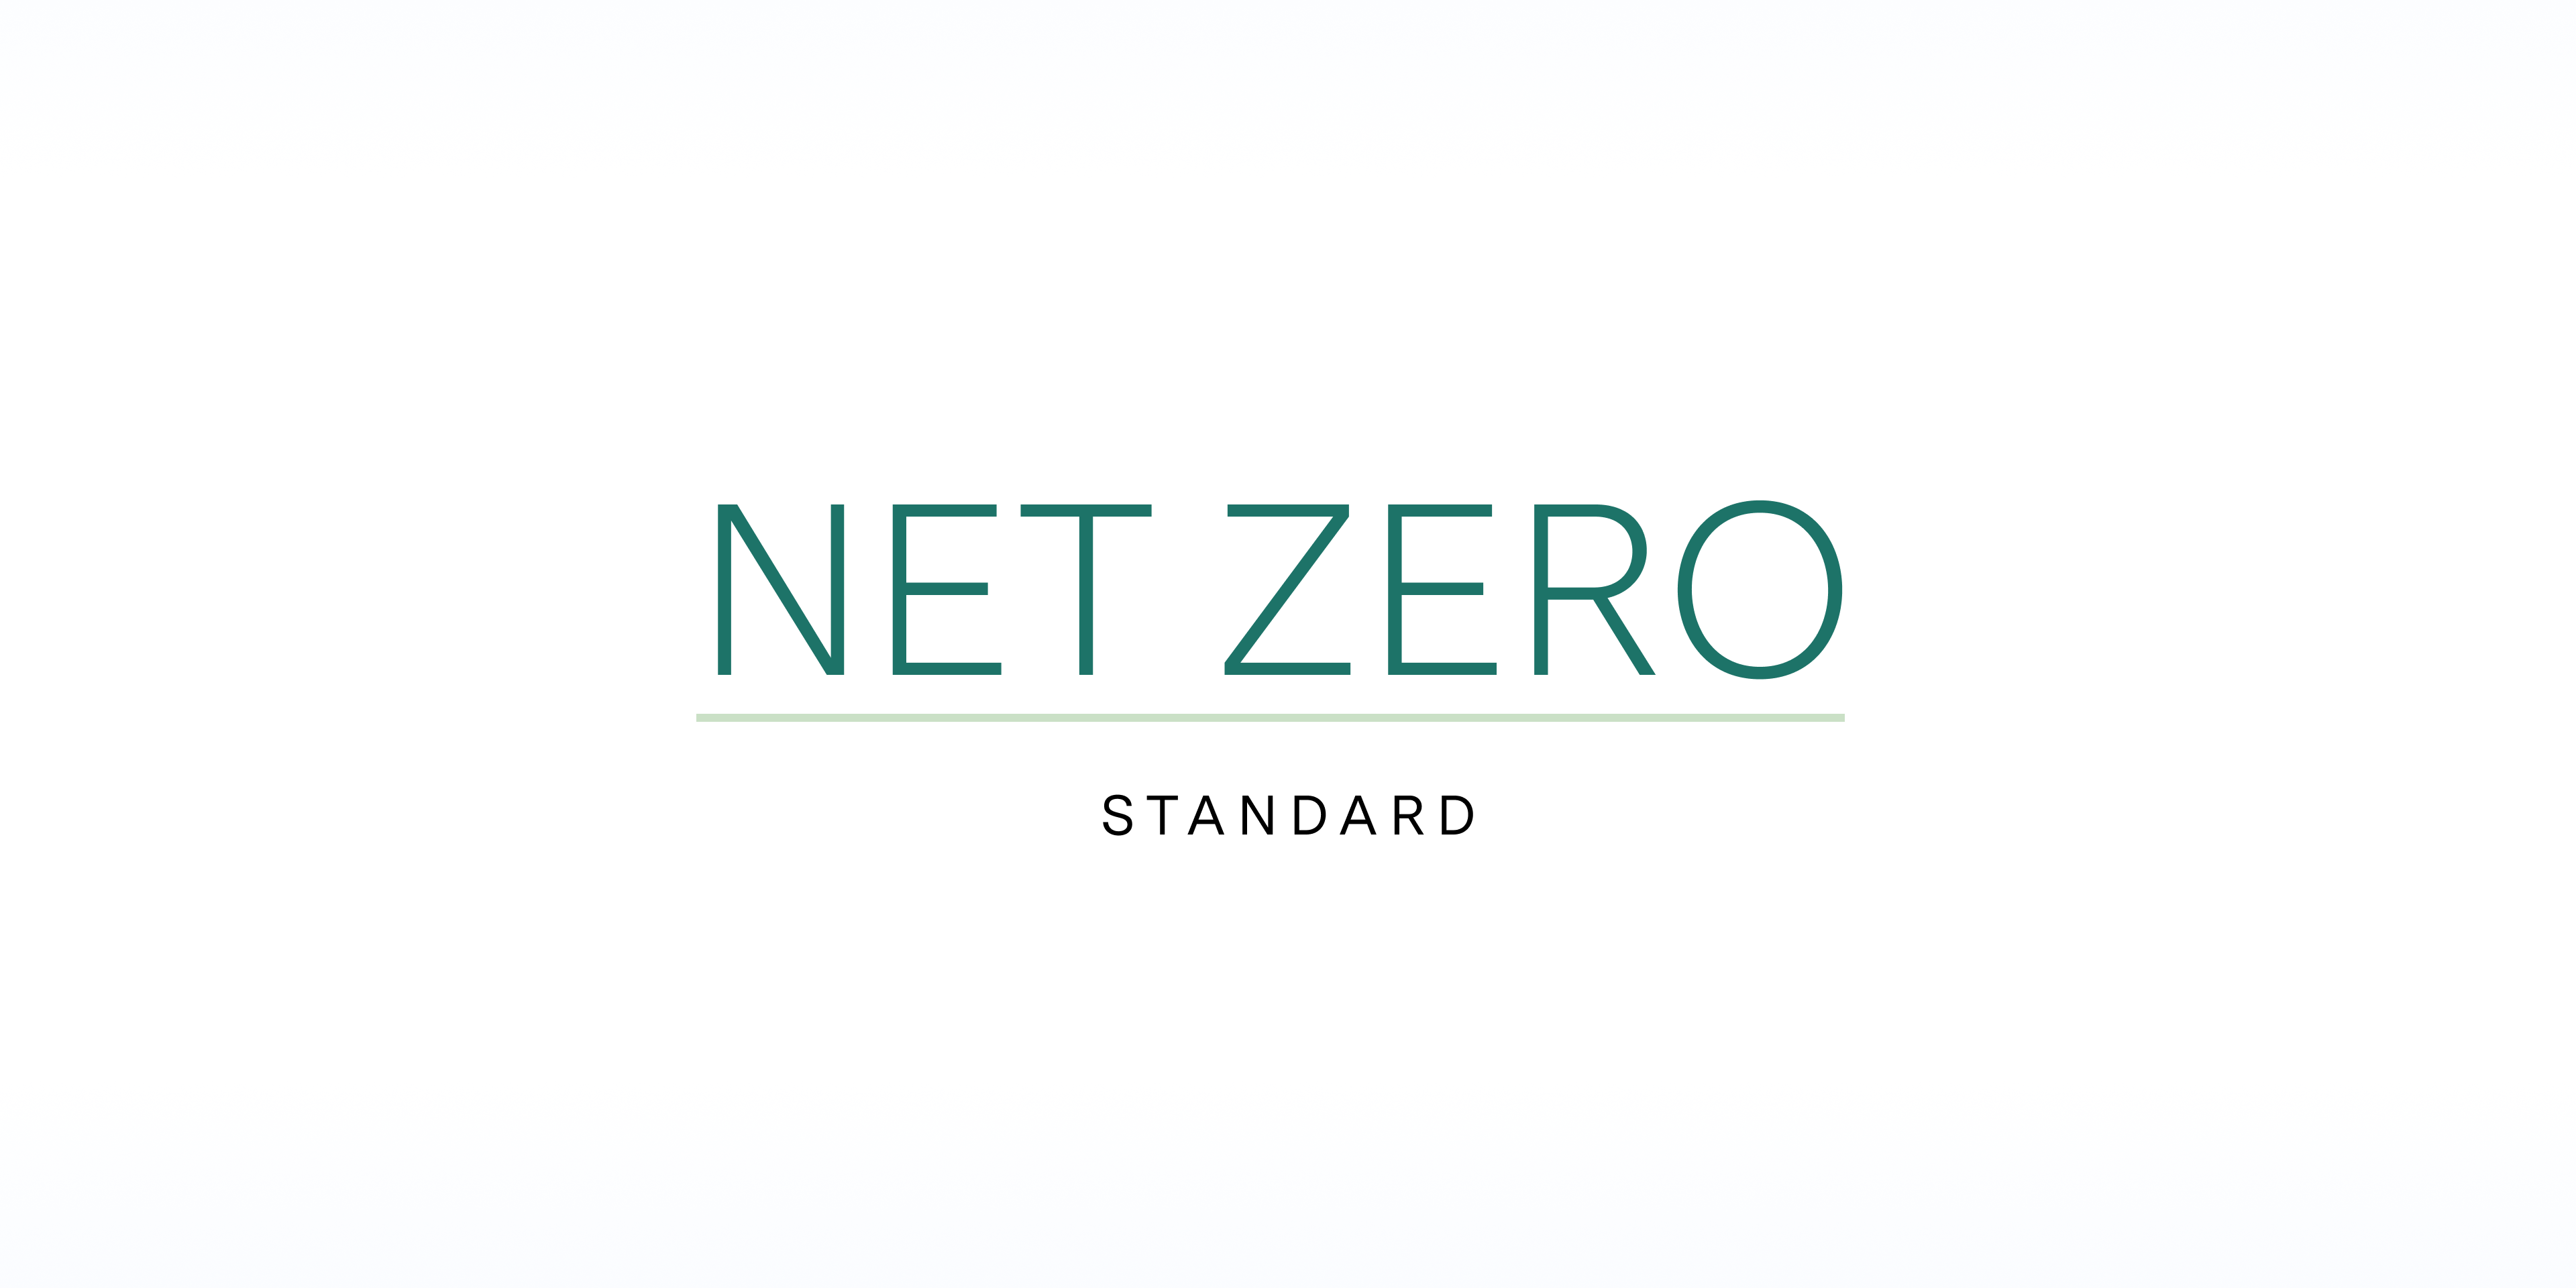 Net Zero standard